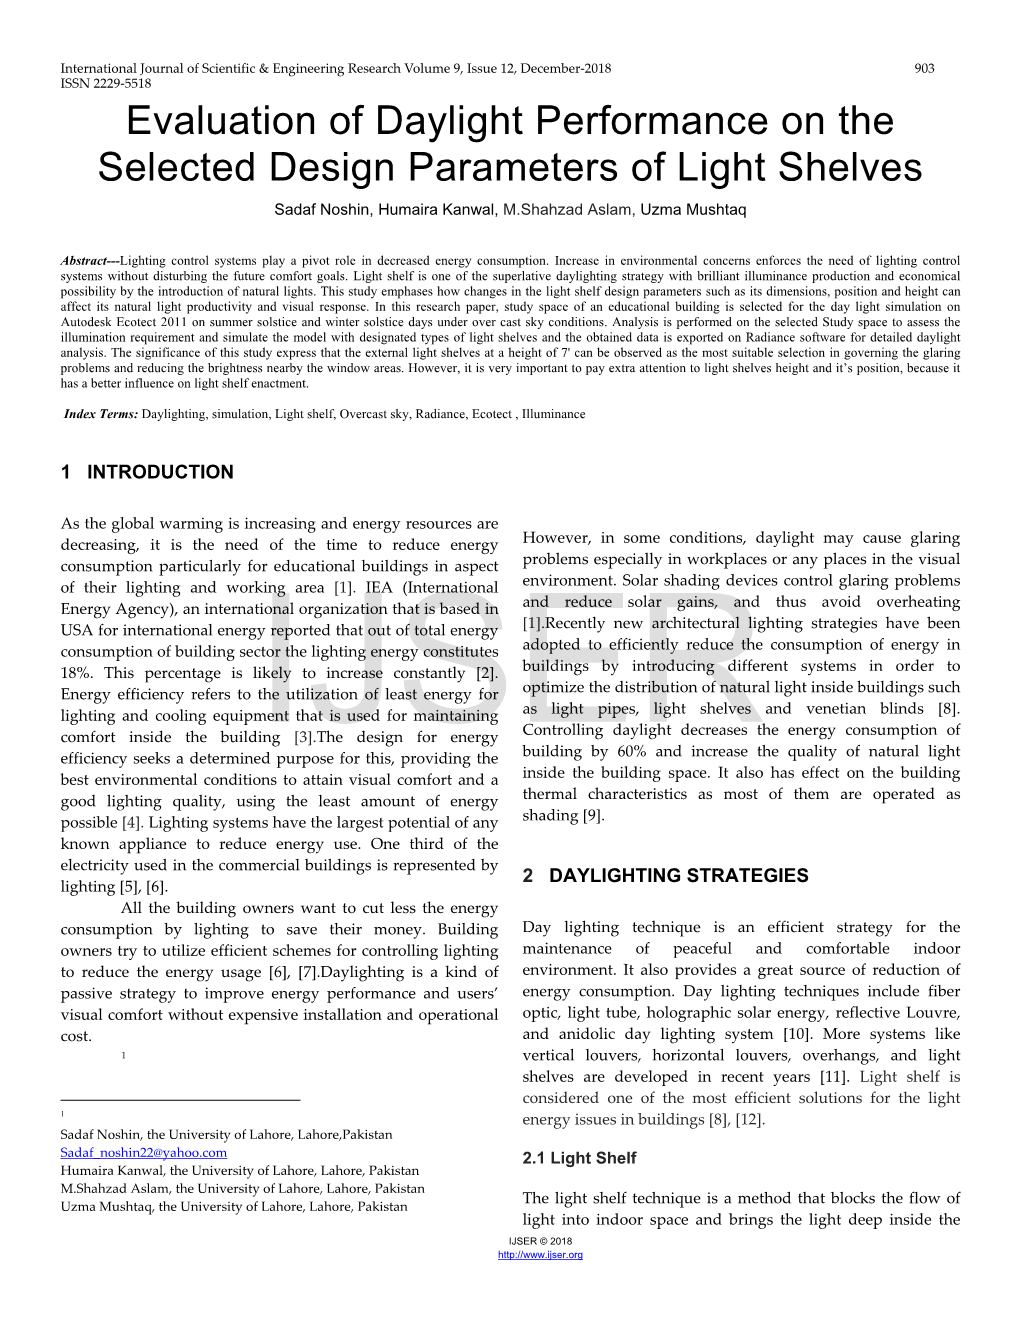 Evaluation of Daylight Performance on the Selected Design Parameters of Light Shelves Sadaf Noshin, Humaira Kanwal, M.Shahzad Aslam, Uzma Mushtaq